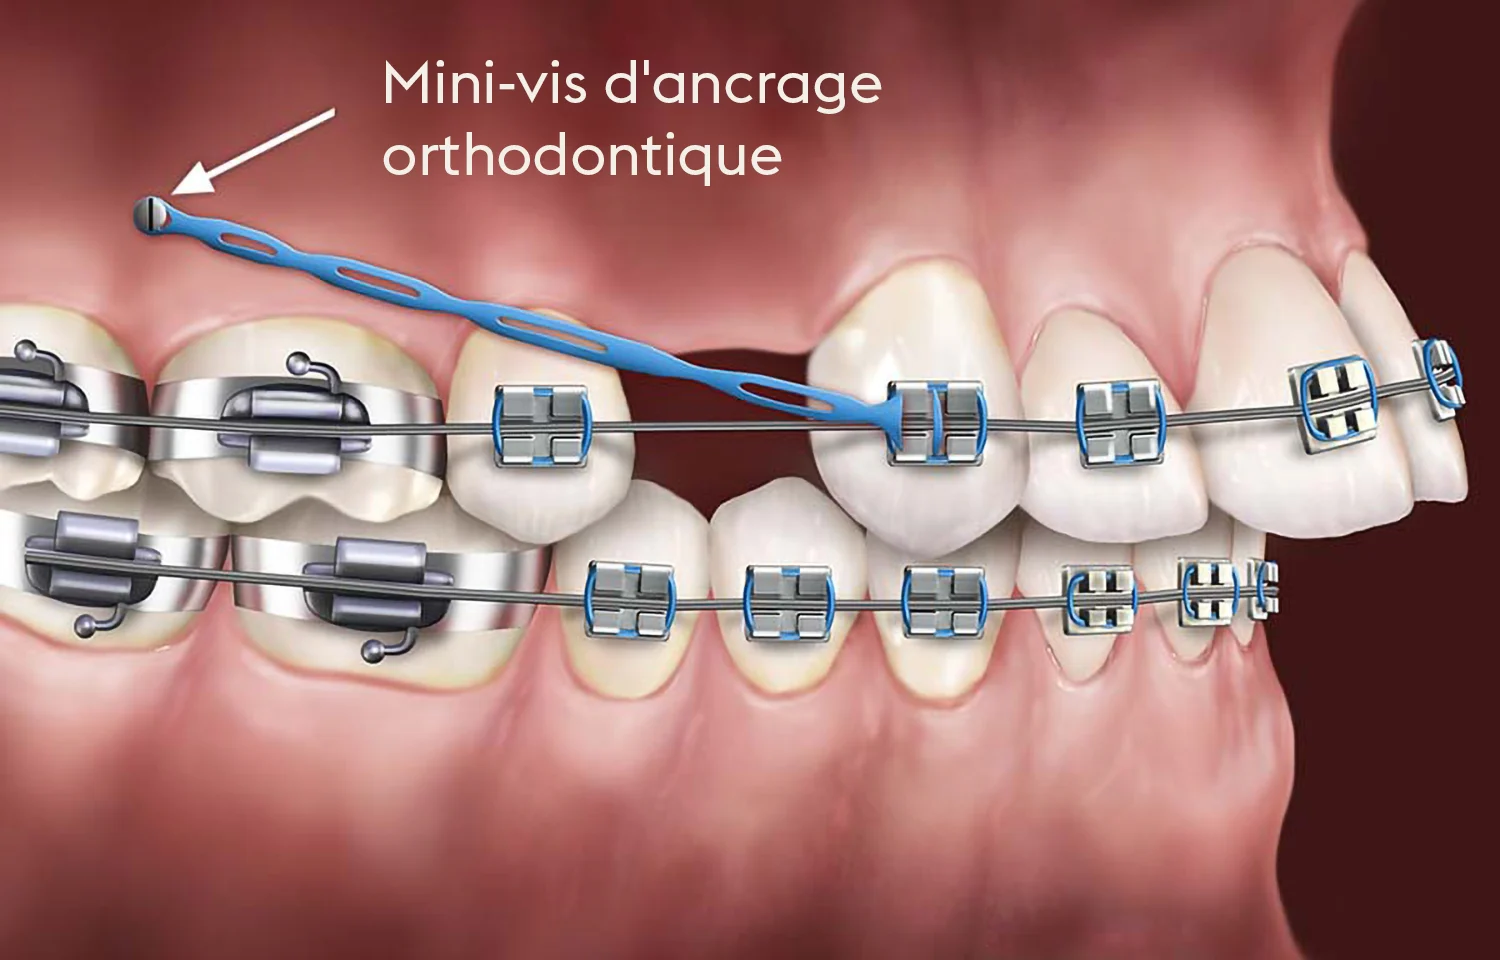 Implant ancrage orthodontique Geneve